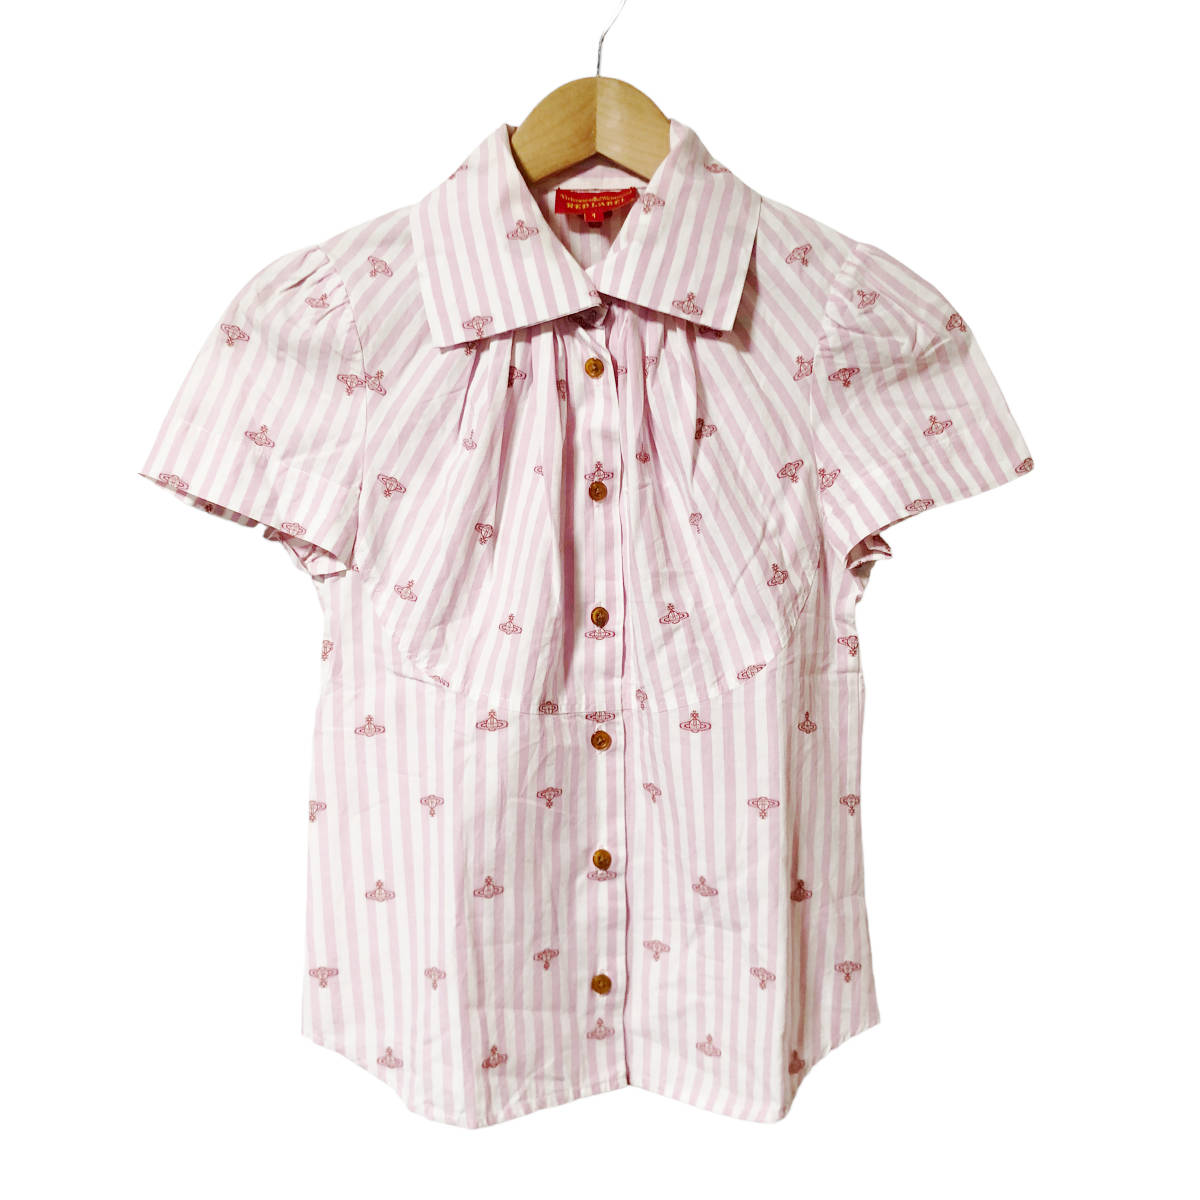 Vivienne Westwood RED LABEL ヴィヴィアンウエストウッド シャツ ブラウス オーブ 刺繍 総柄 半袖 ストライプ 1 白 ピンク レディース A22_画像1